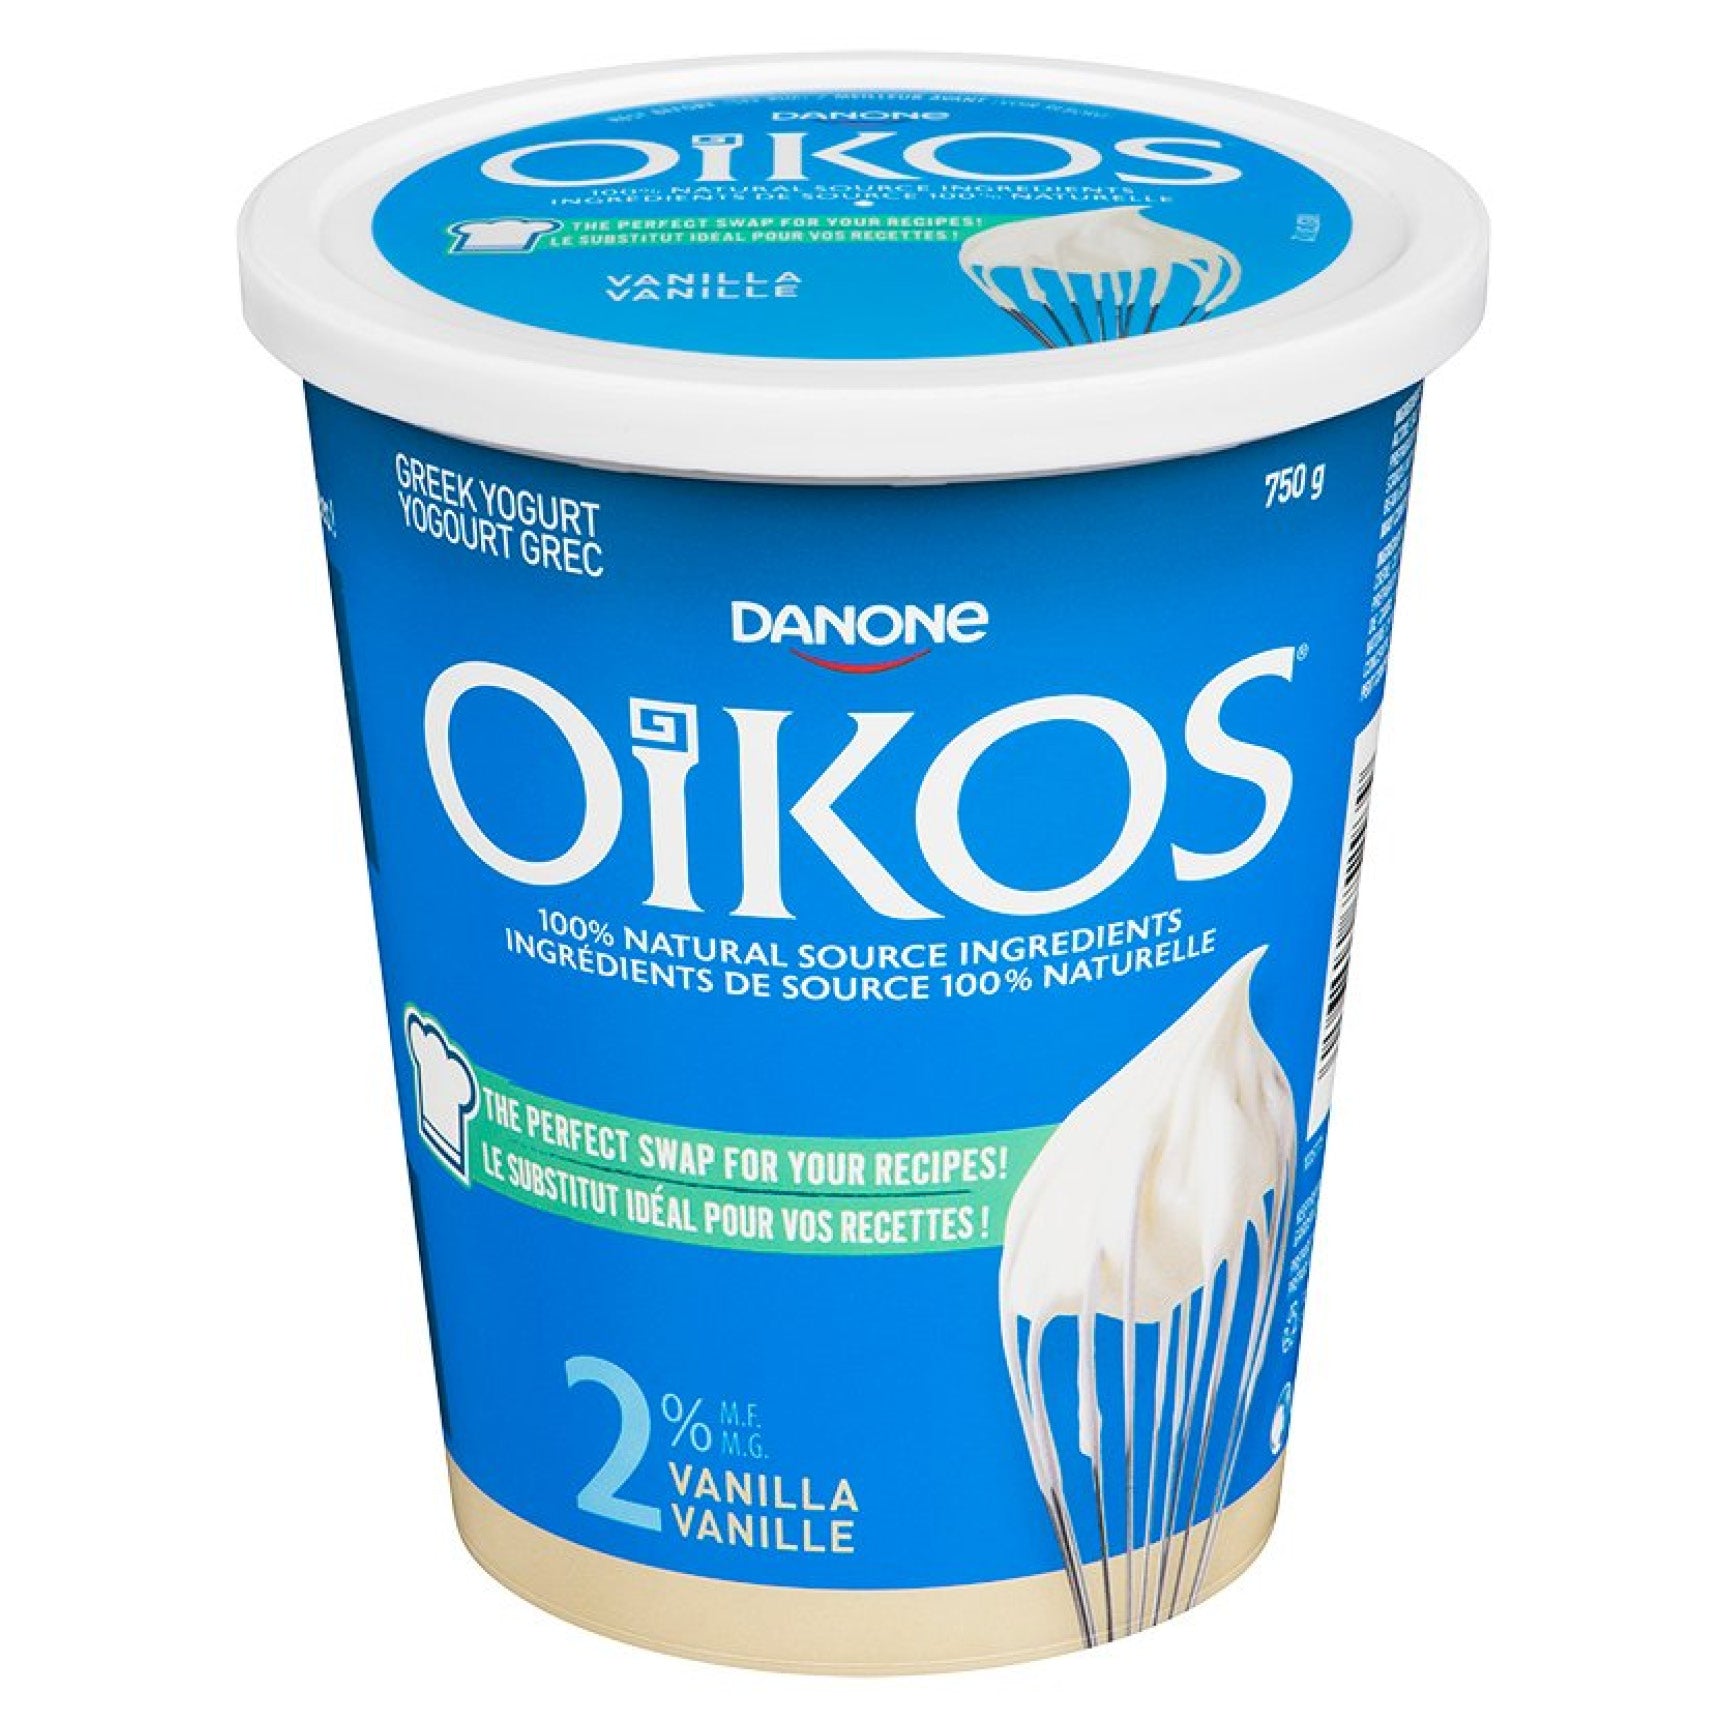 Oikos Greek Yogurt Tub 2%, Vanilla, 750g